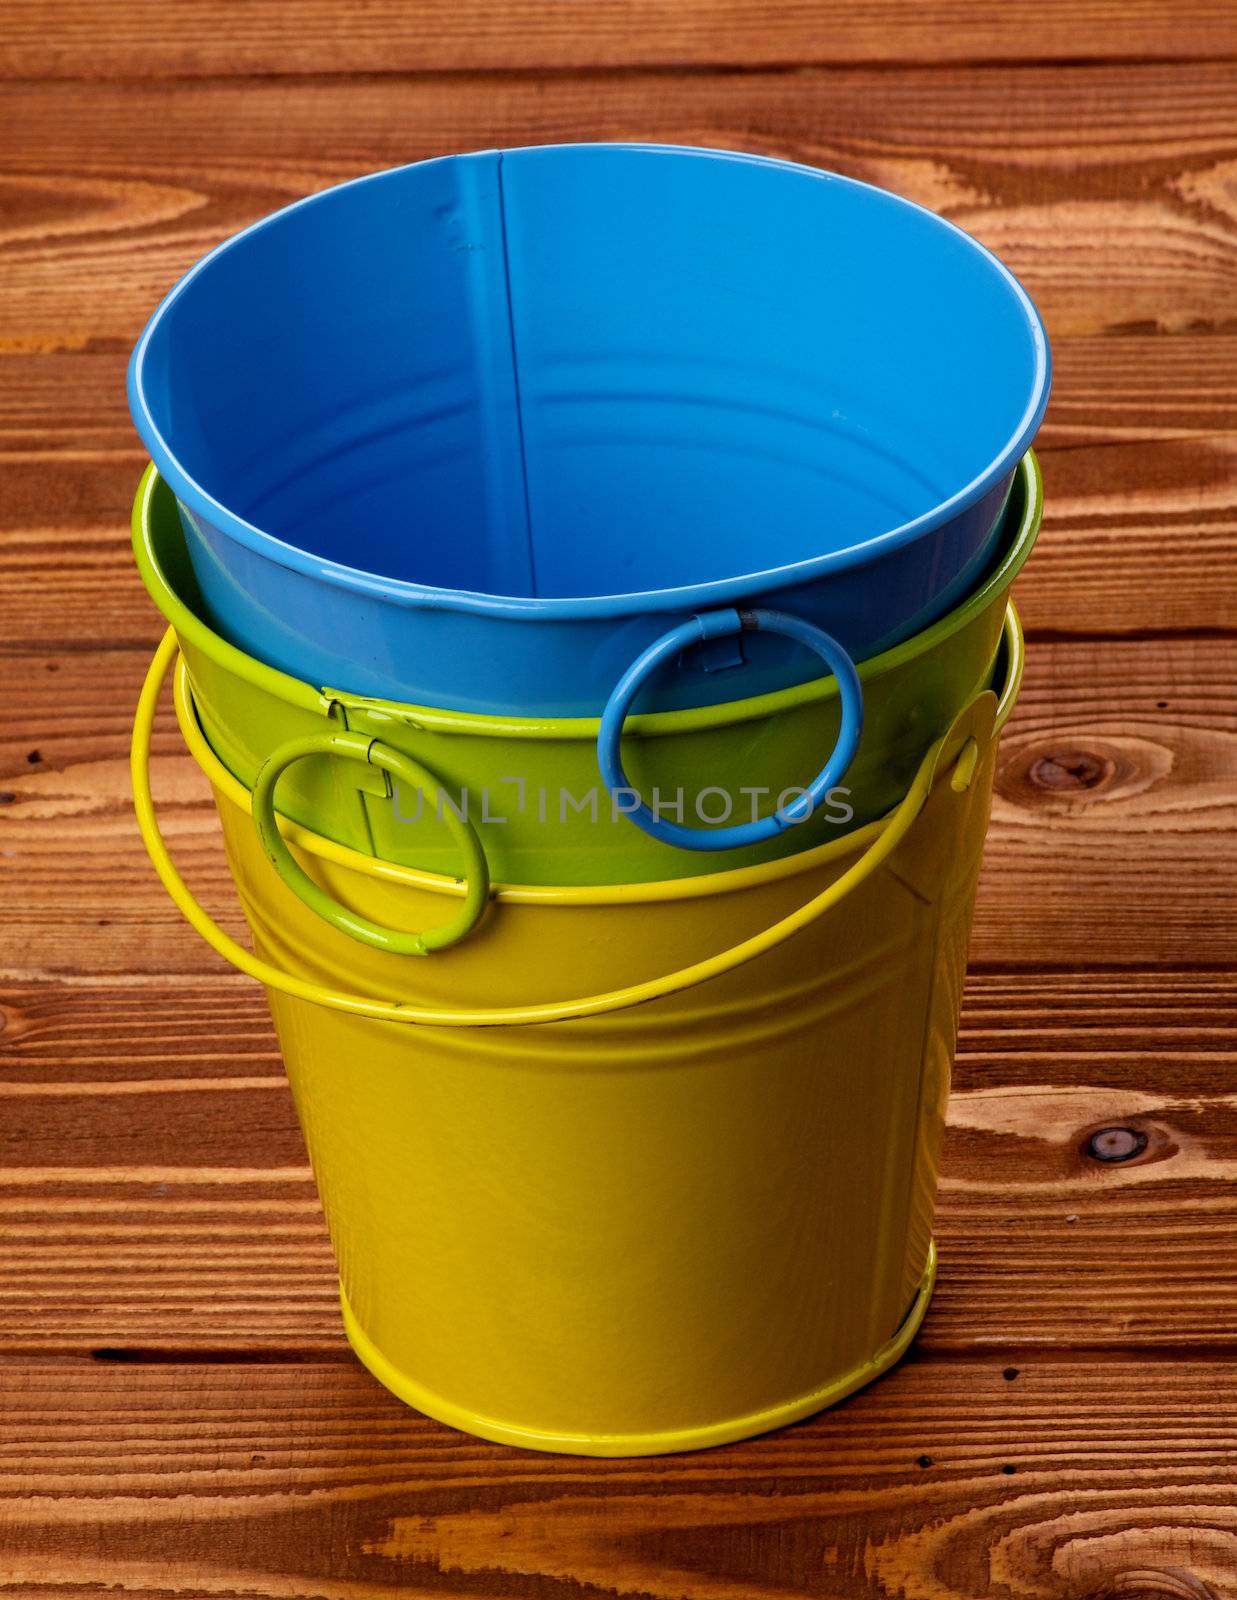 Colour Tin Buckets by zhekos